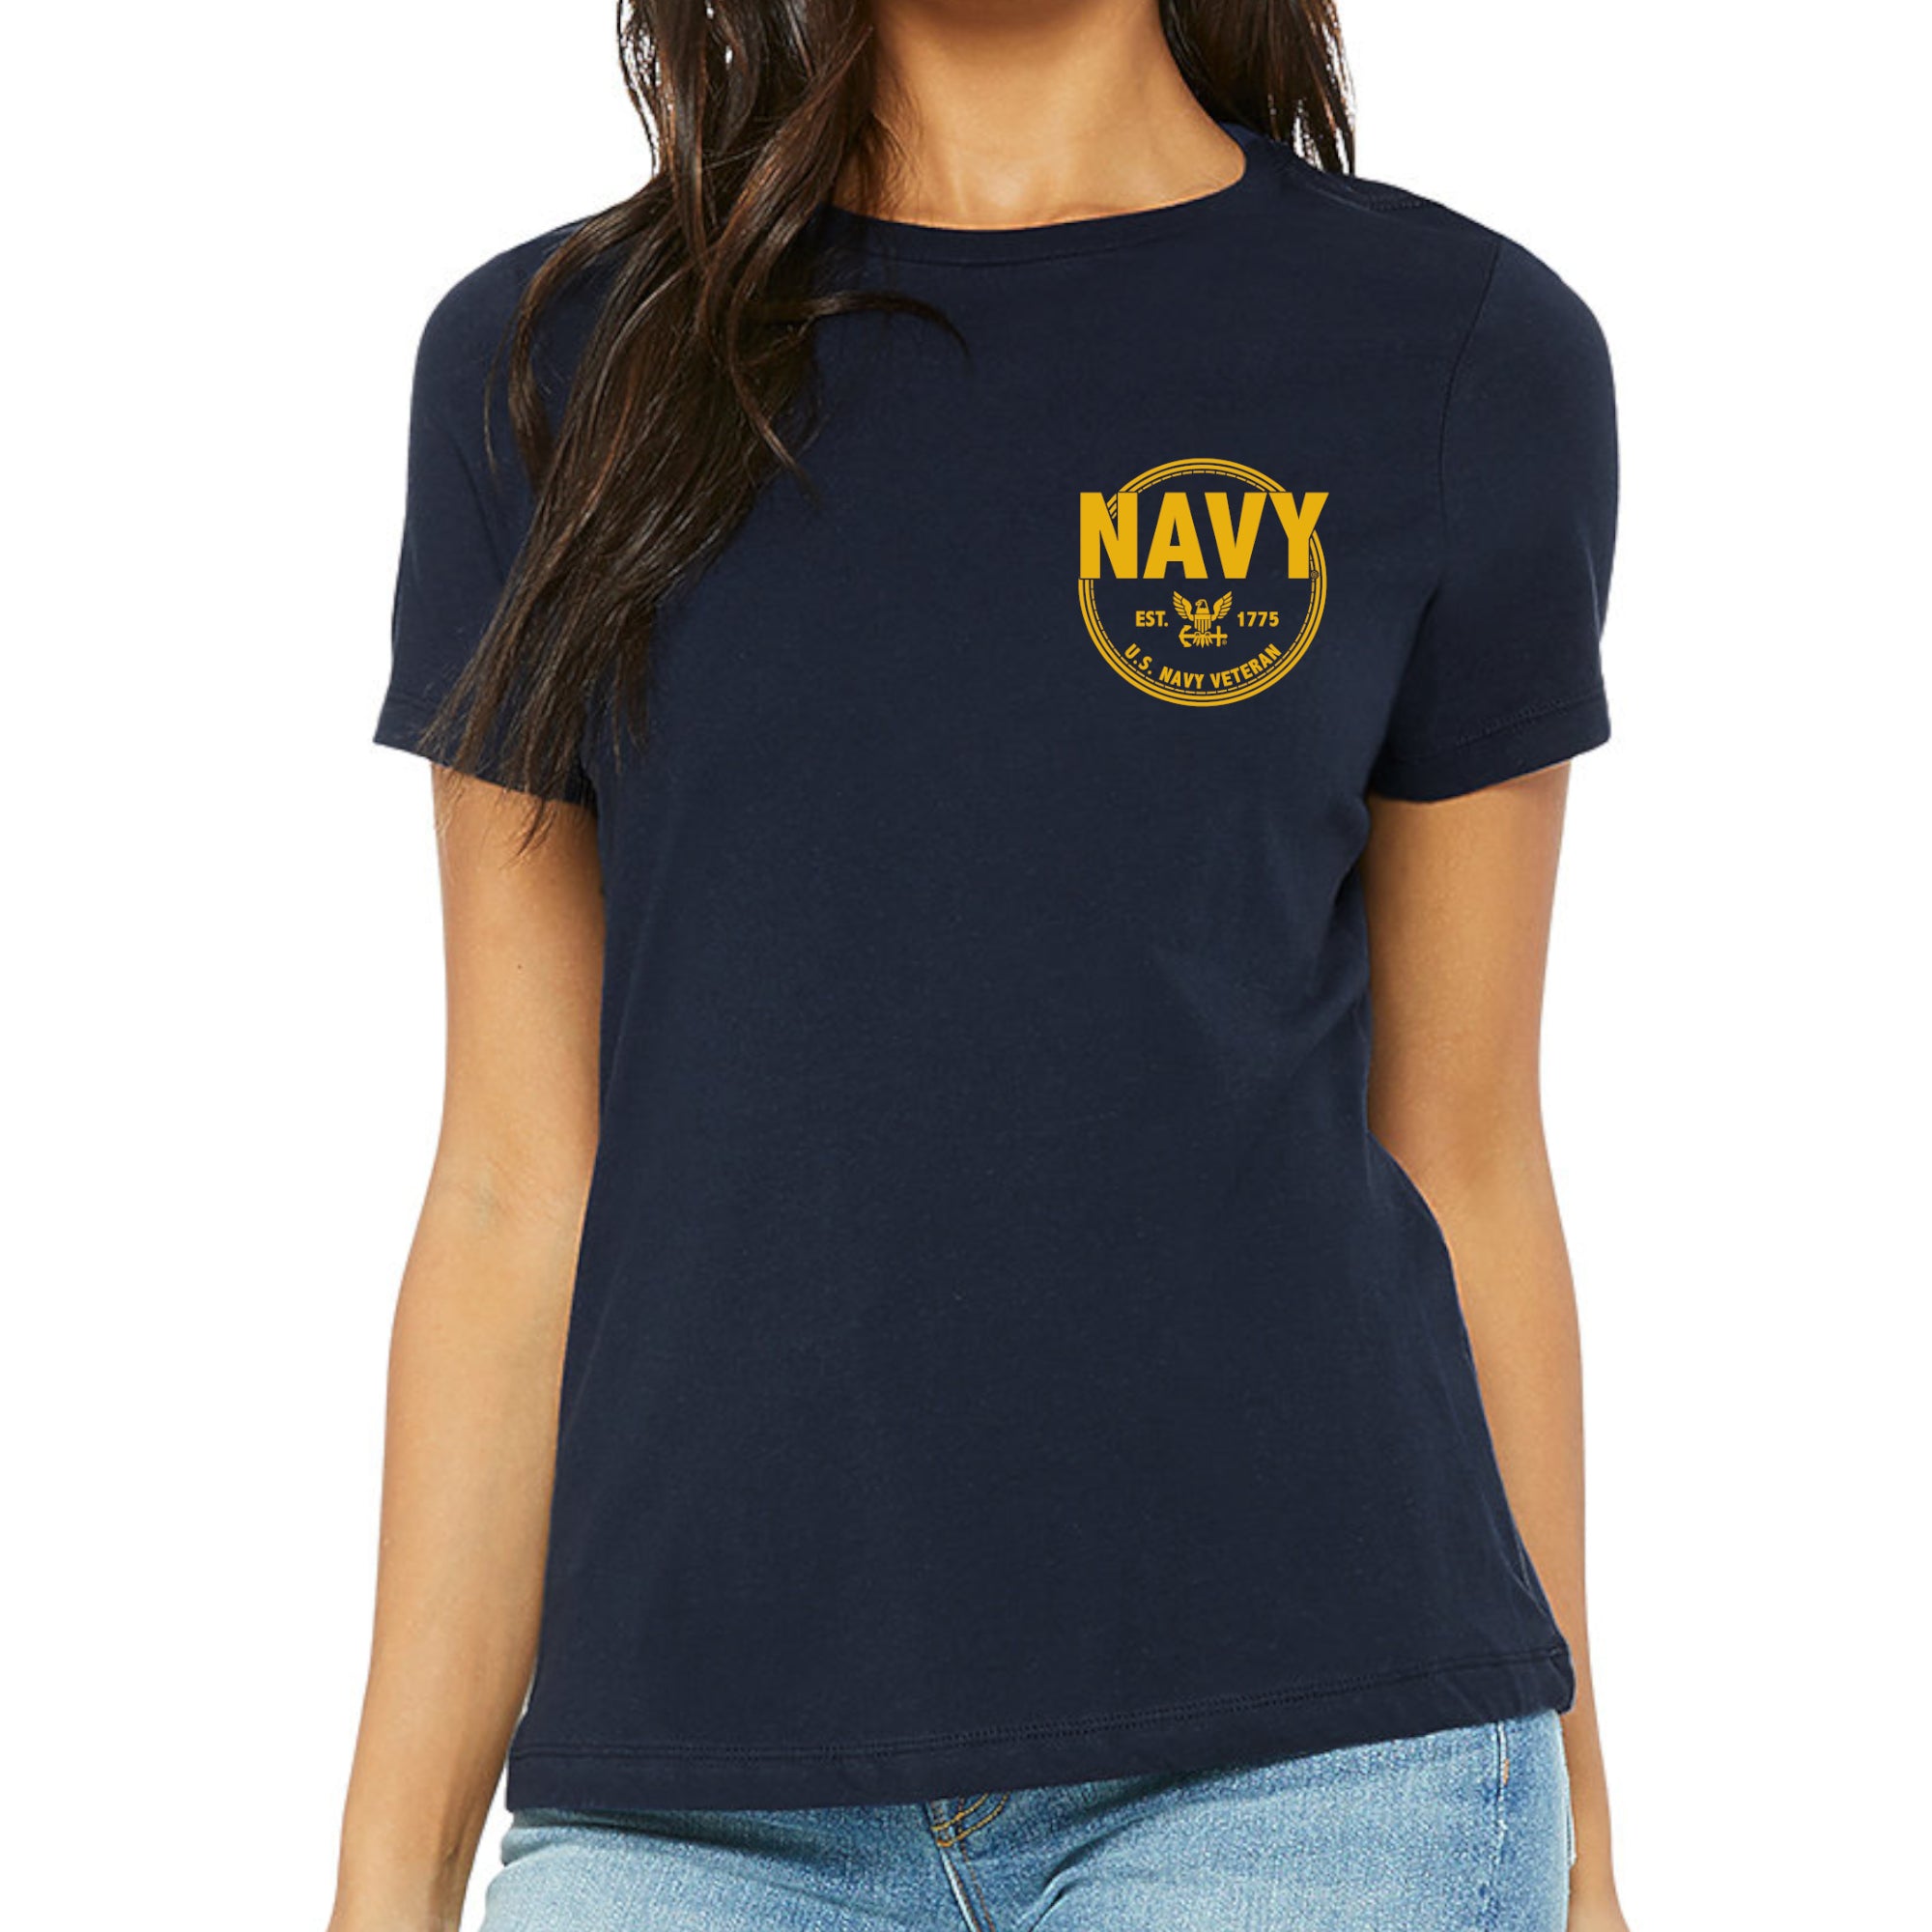 Navy Veteran Ladies T-Shirt